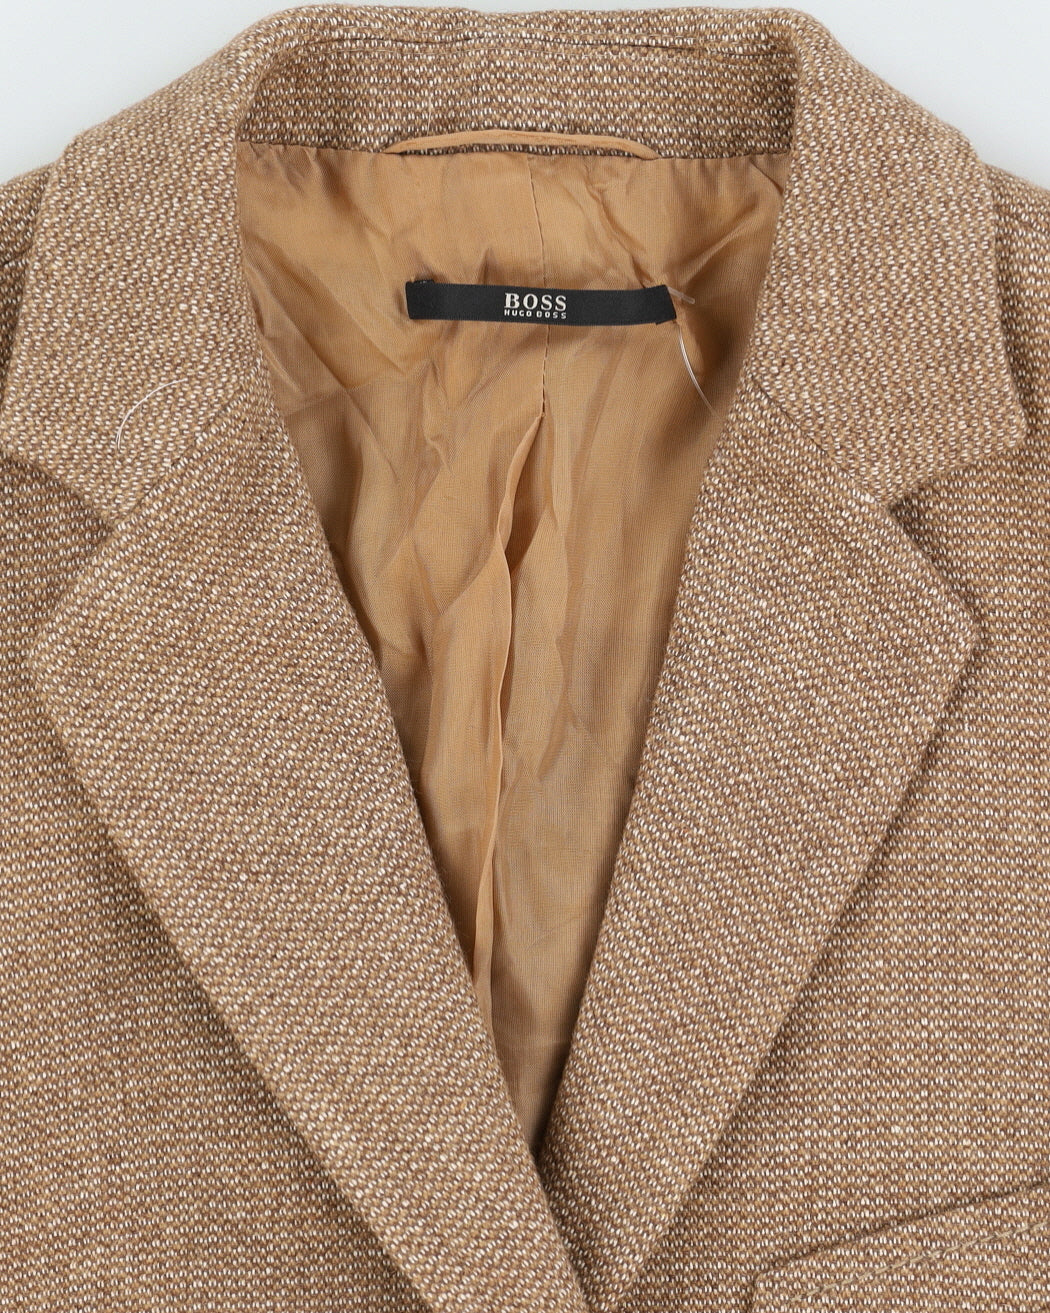 Hugo Boss Brown Tweed Blazer Jacket - S